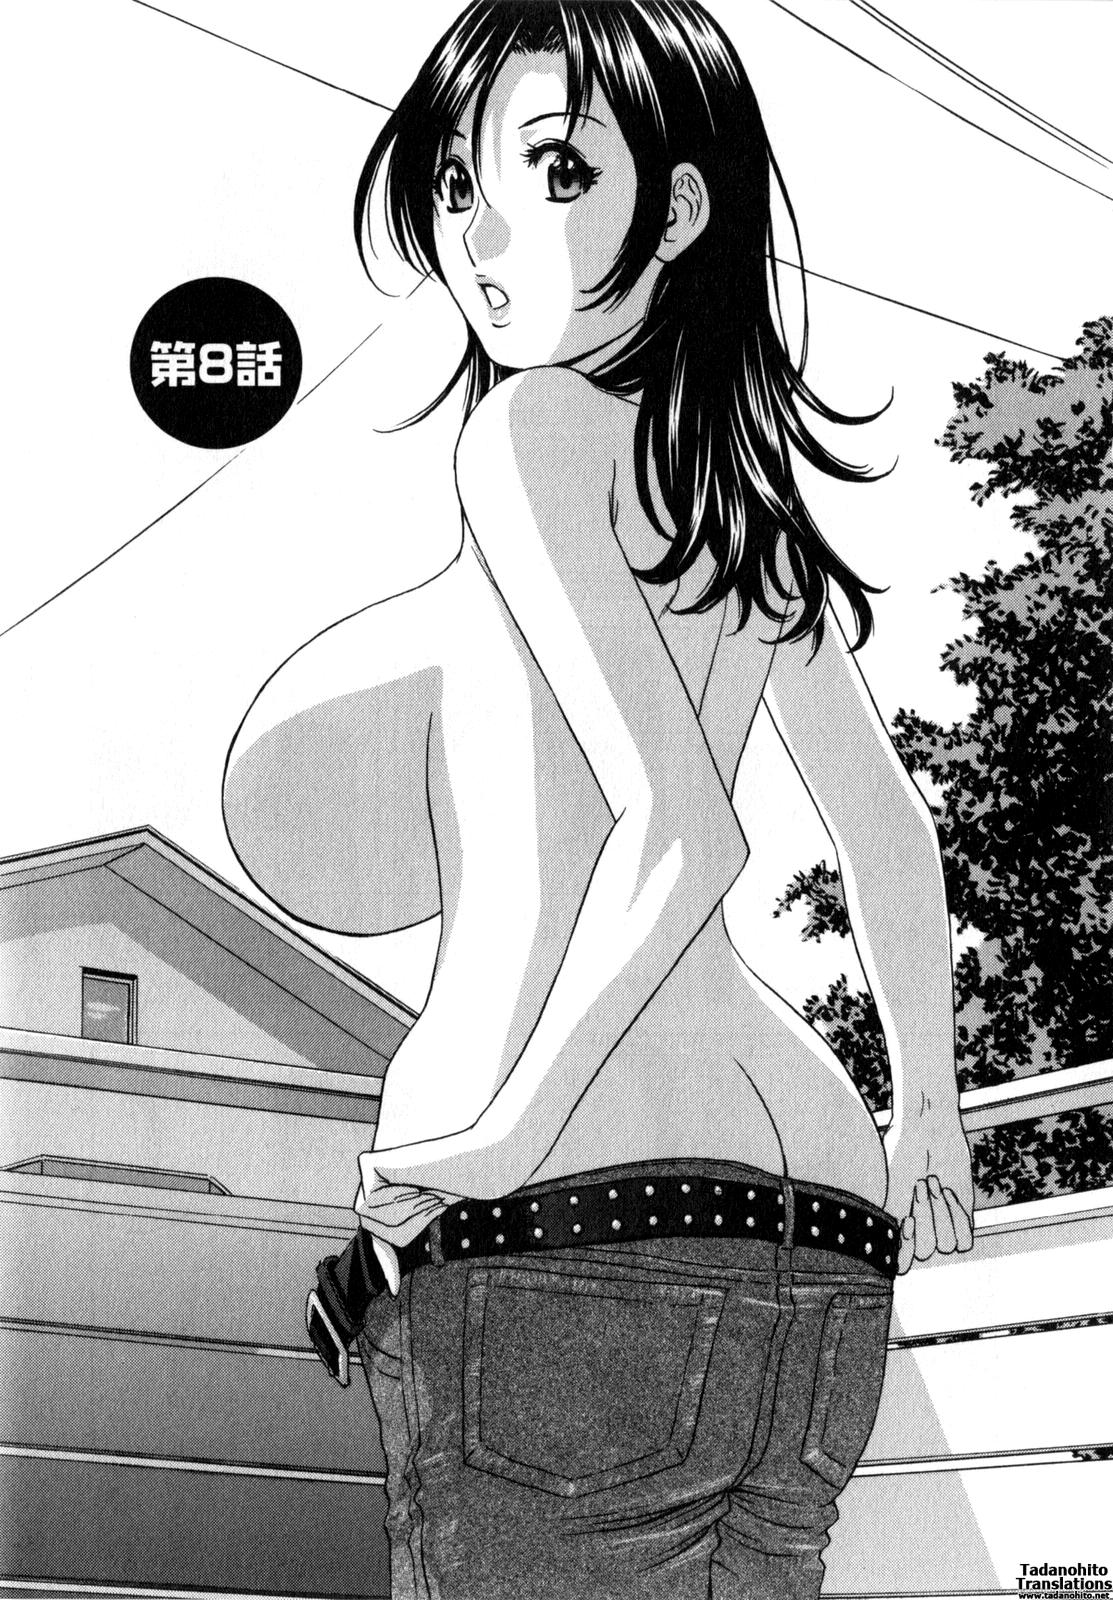 [Hidemaru] Life with Married Women Just Like a Manga 1 - Ch. 1-9 [English] {Tadanohito} 142